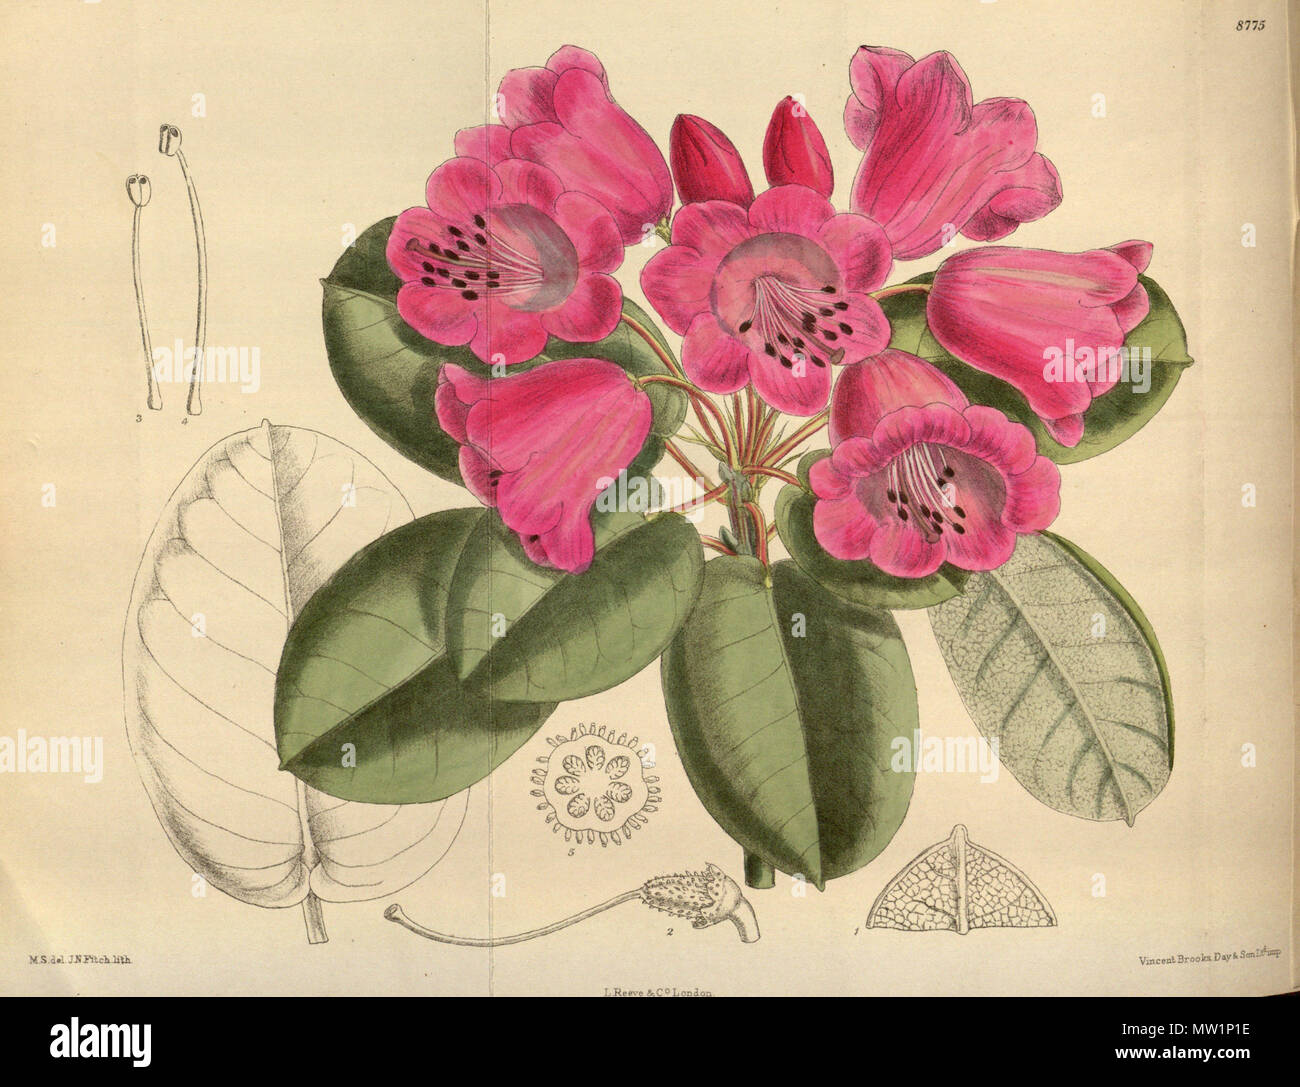 . Rhododendron orbiculare, Ericaceae . 1918. M.S. del., J.N.Fitch lith. 519 Rhododendron orbiculare 144-8775 Stock Photo